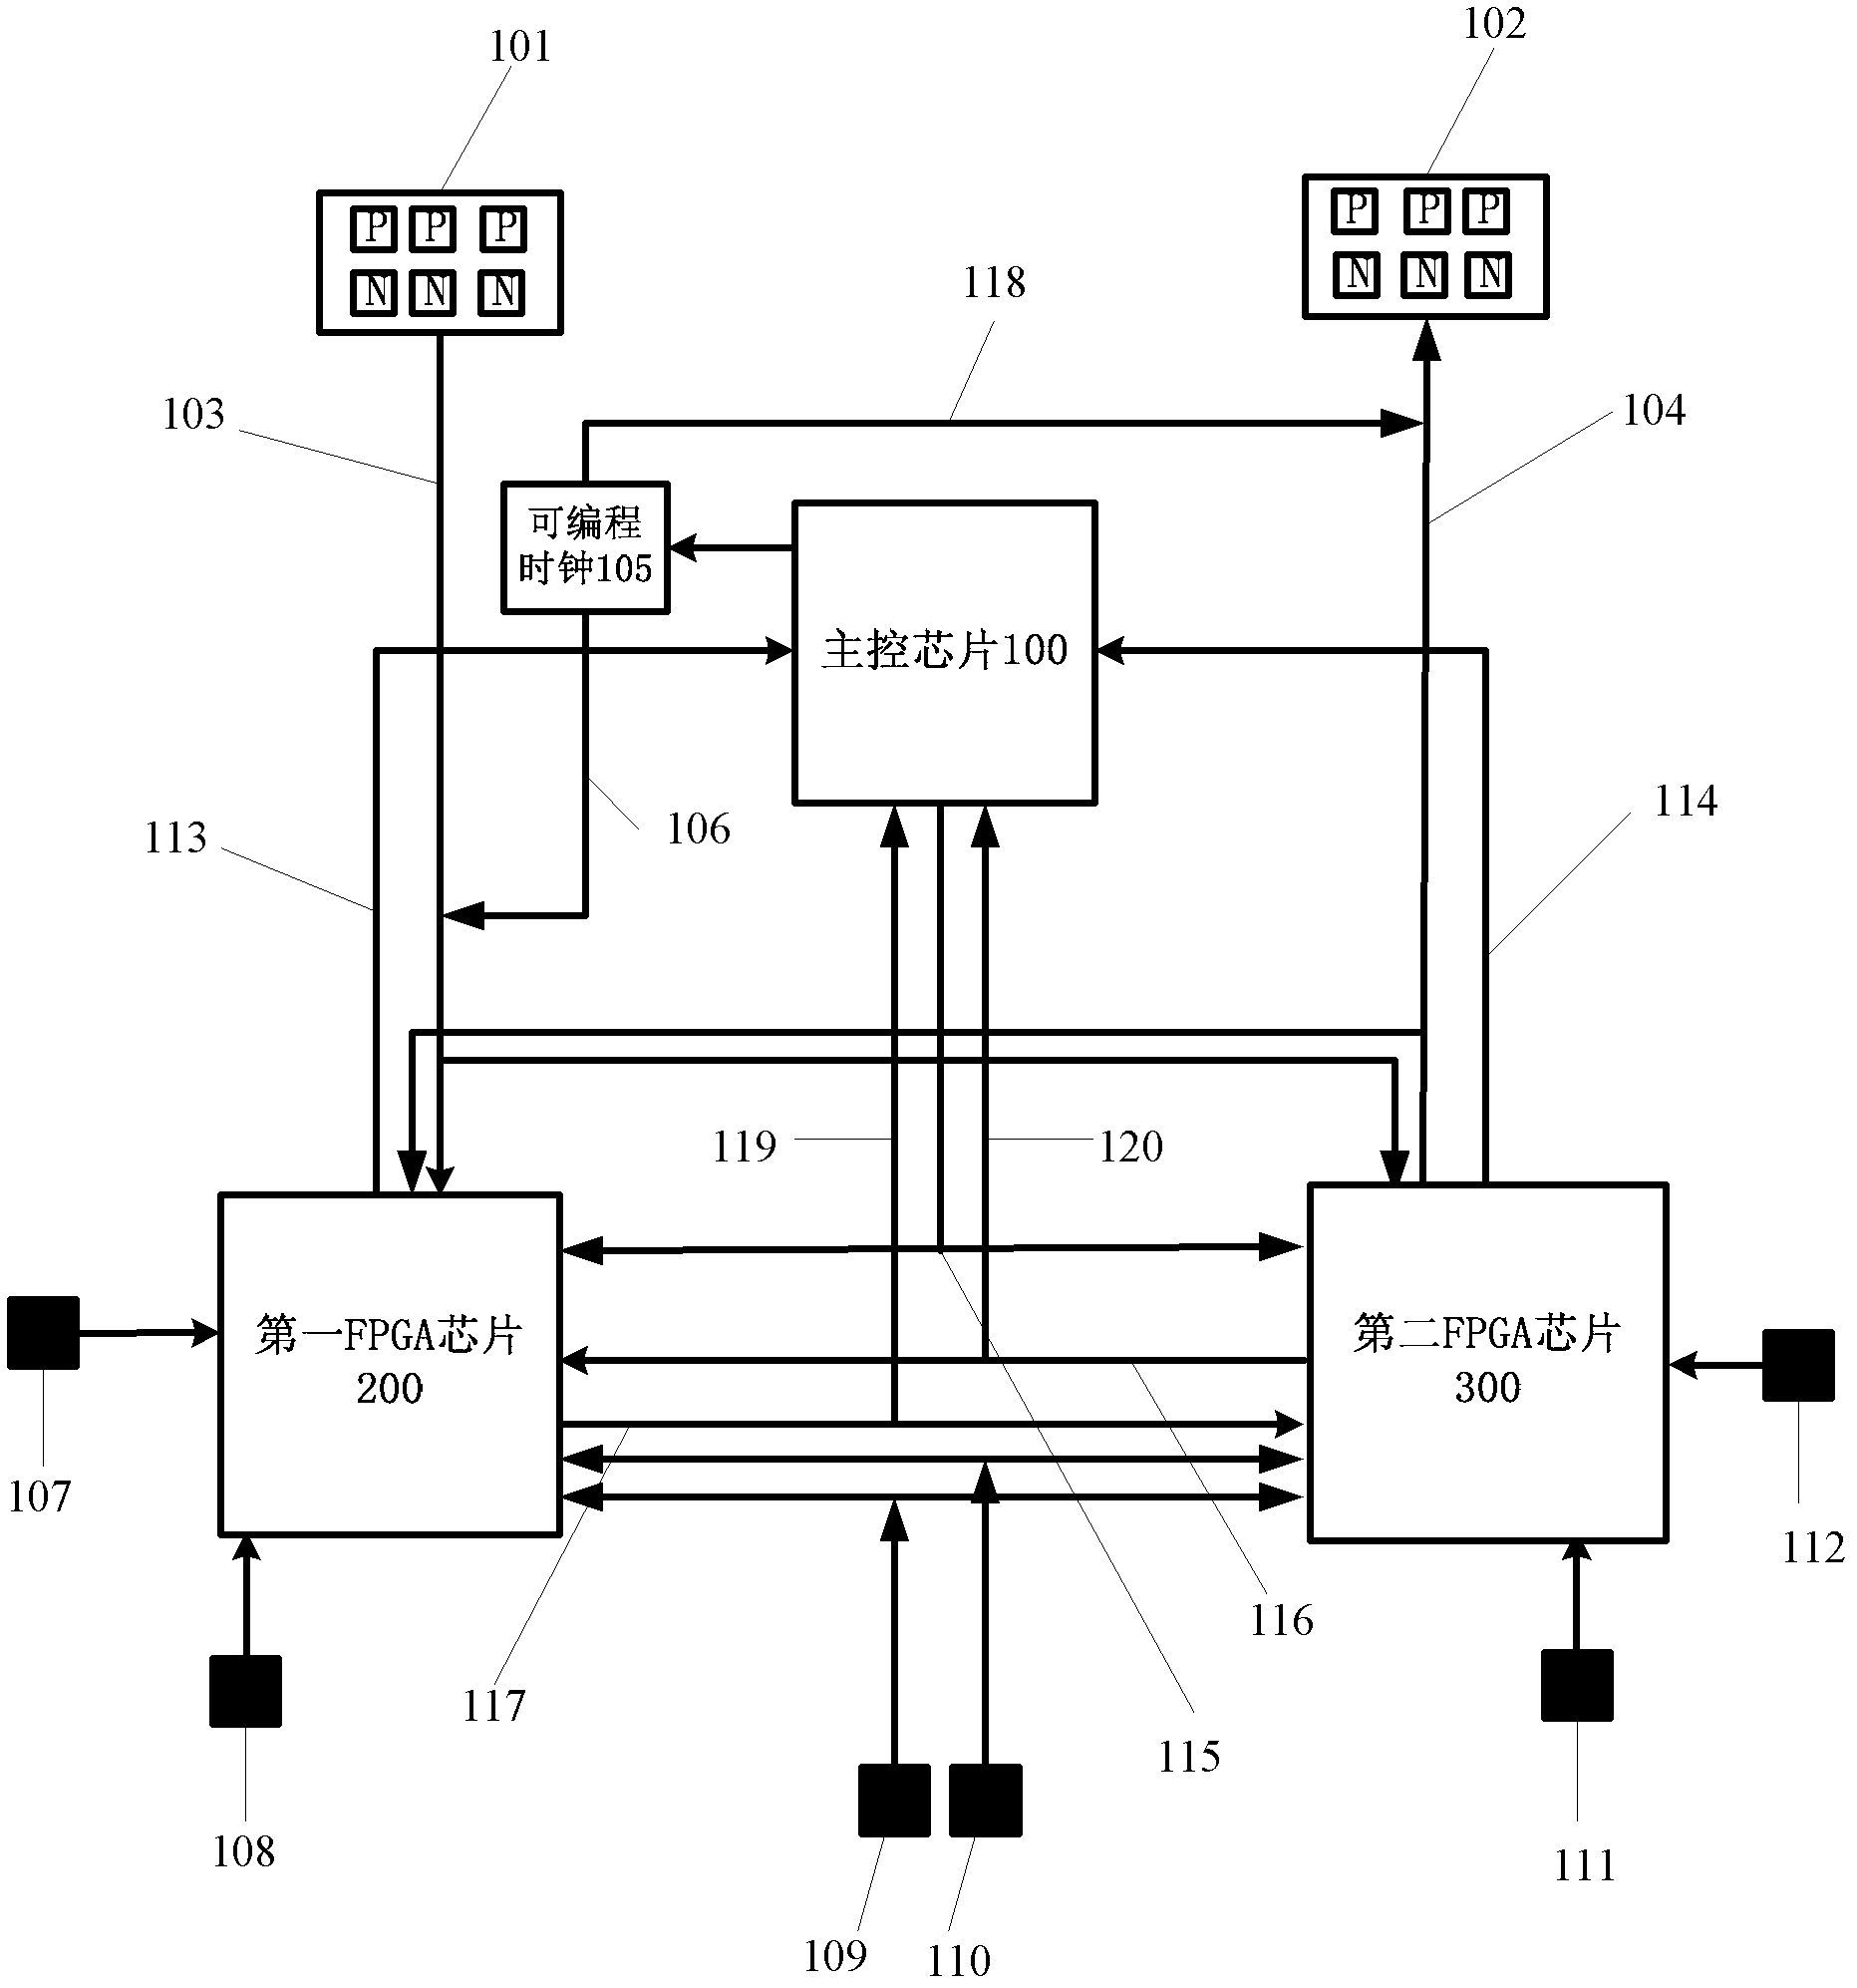 Field-programmable gate array (FPGA) prototype verification clock device